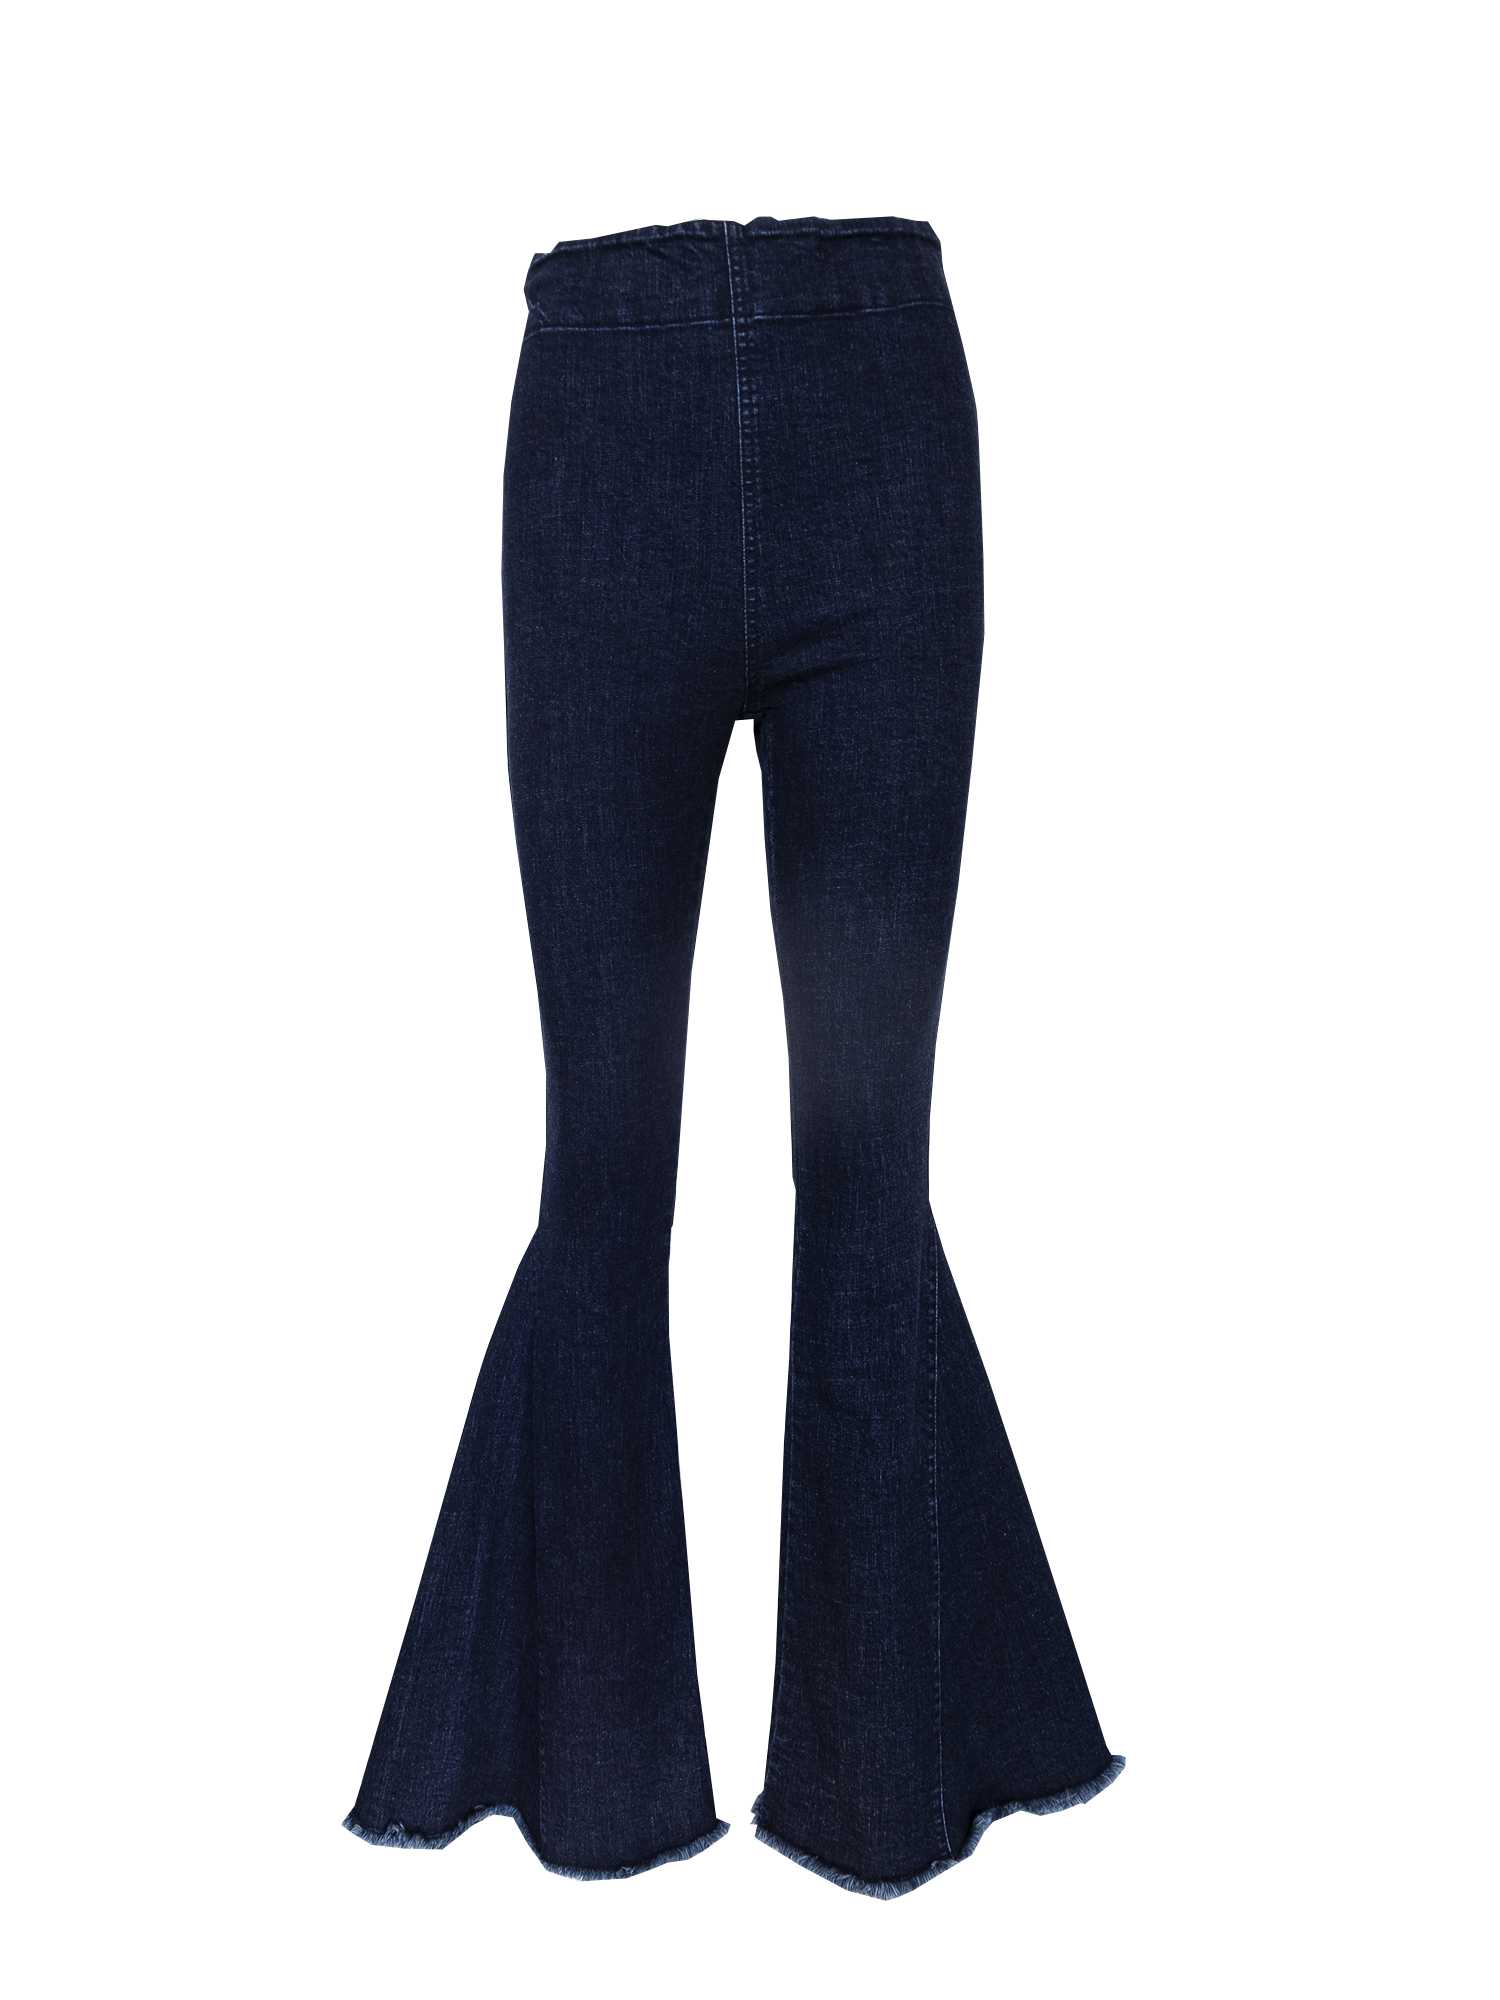 LOLISSIMA - dark blue flared jeans pants